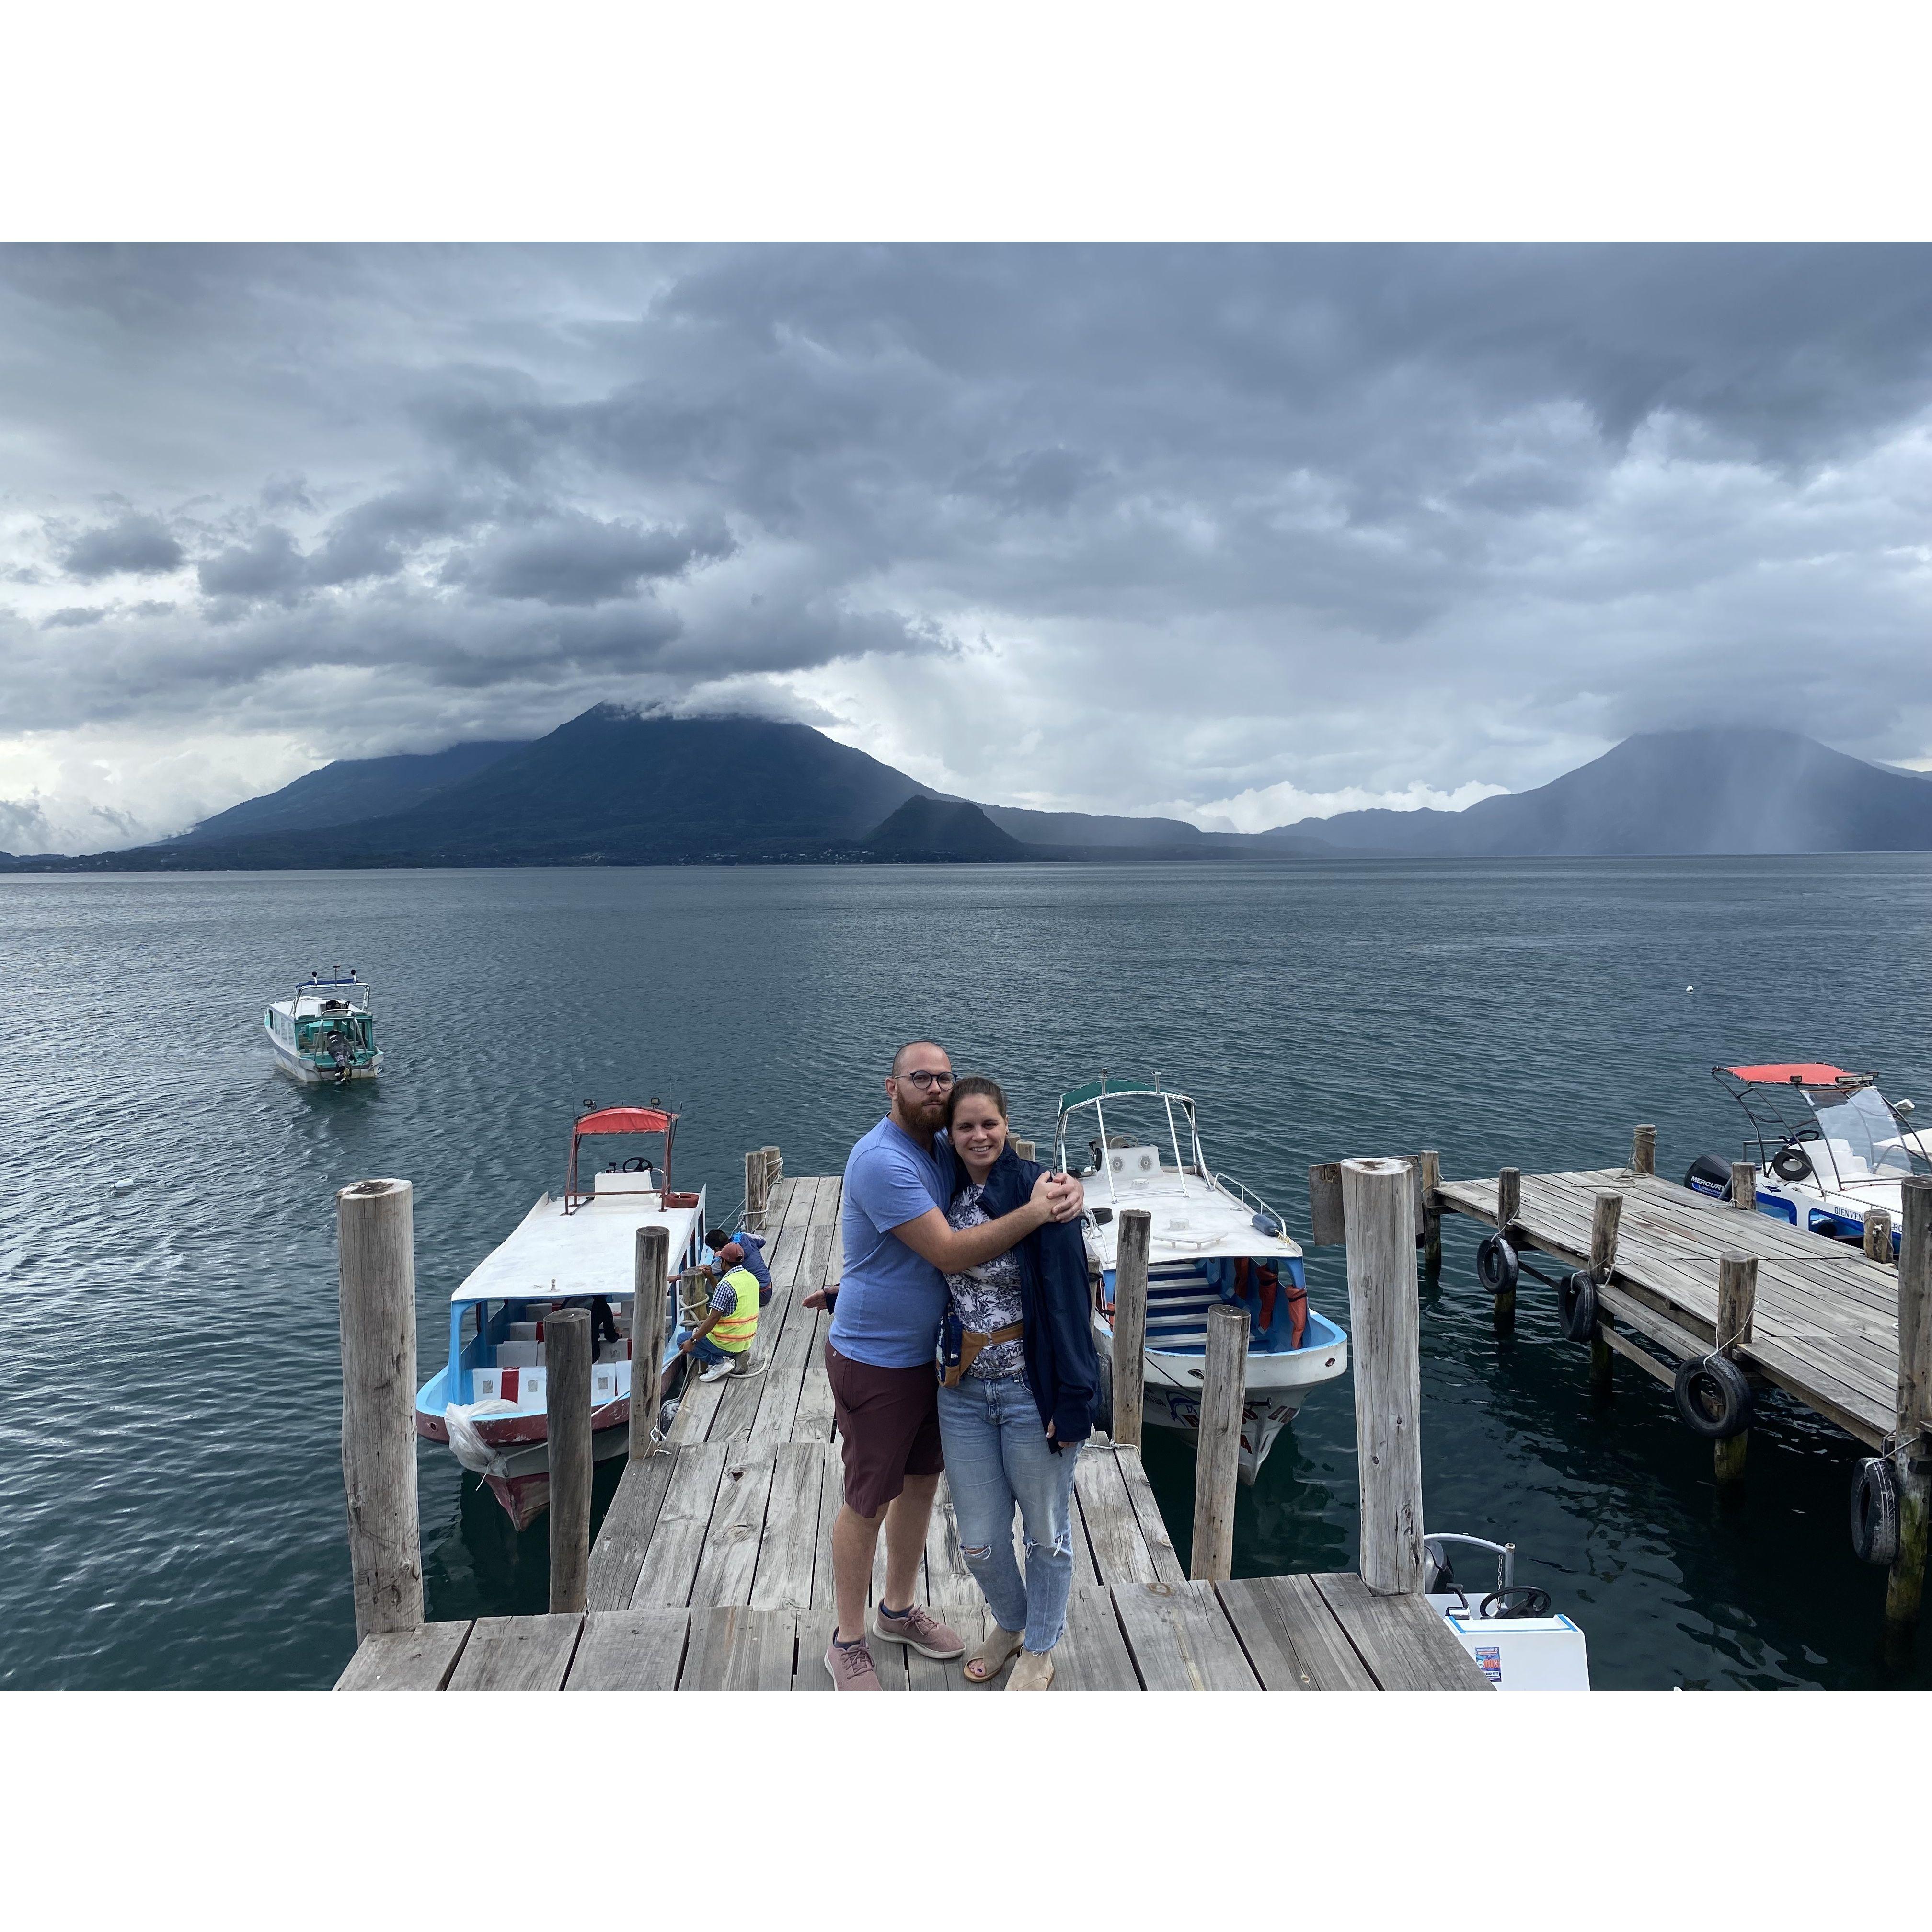 Lake Atilan, Guatemala